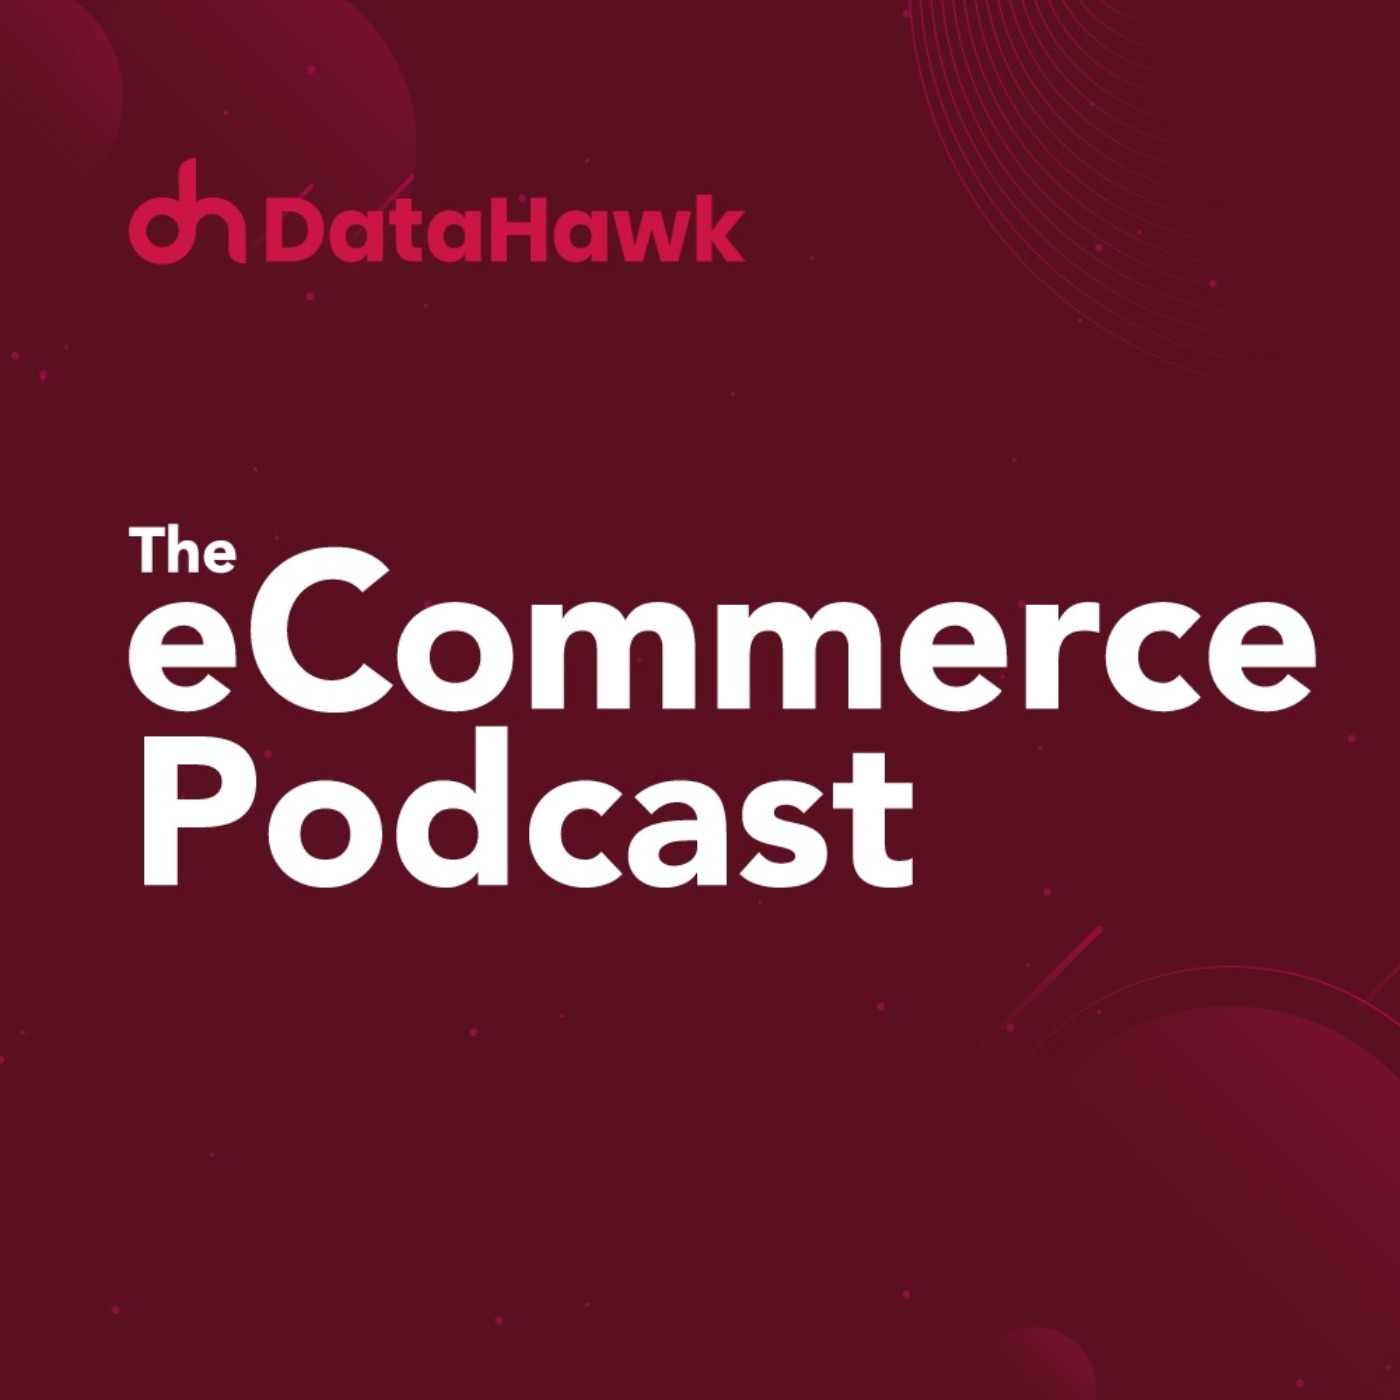 DataHawk: The eCommerce Podcast